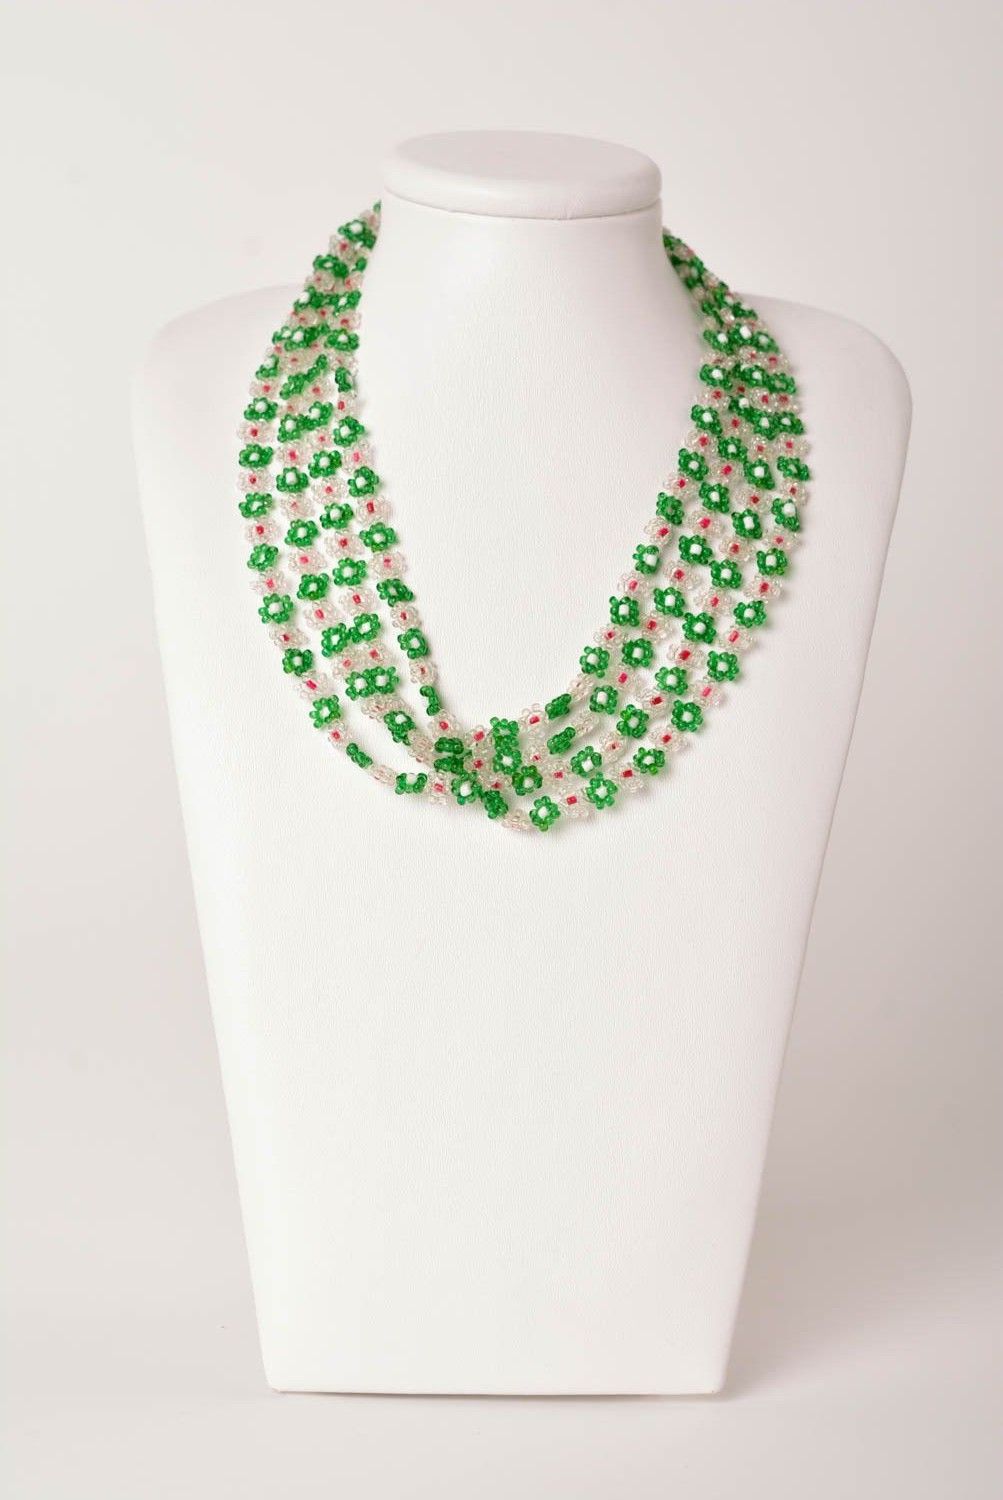 Stylish handmade beaded necklace cool jewelry designs bead weaving ideas photo 4